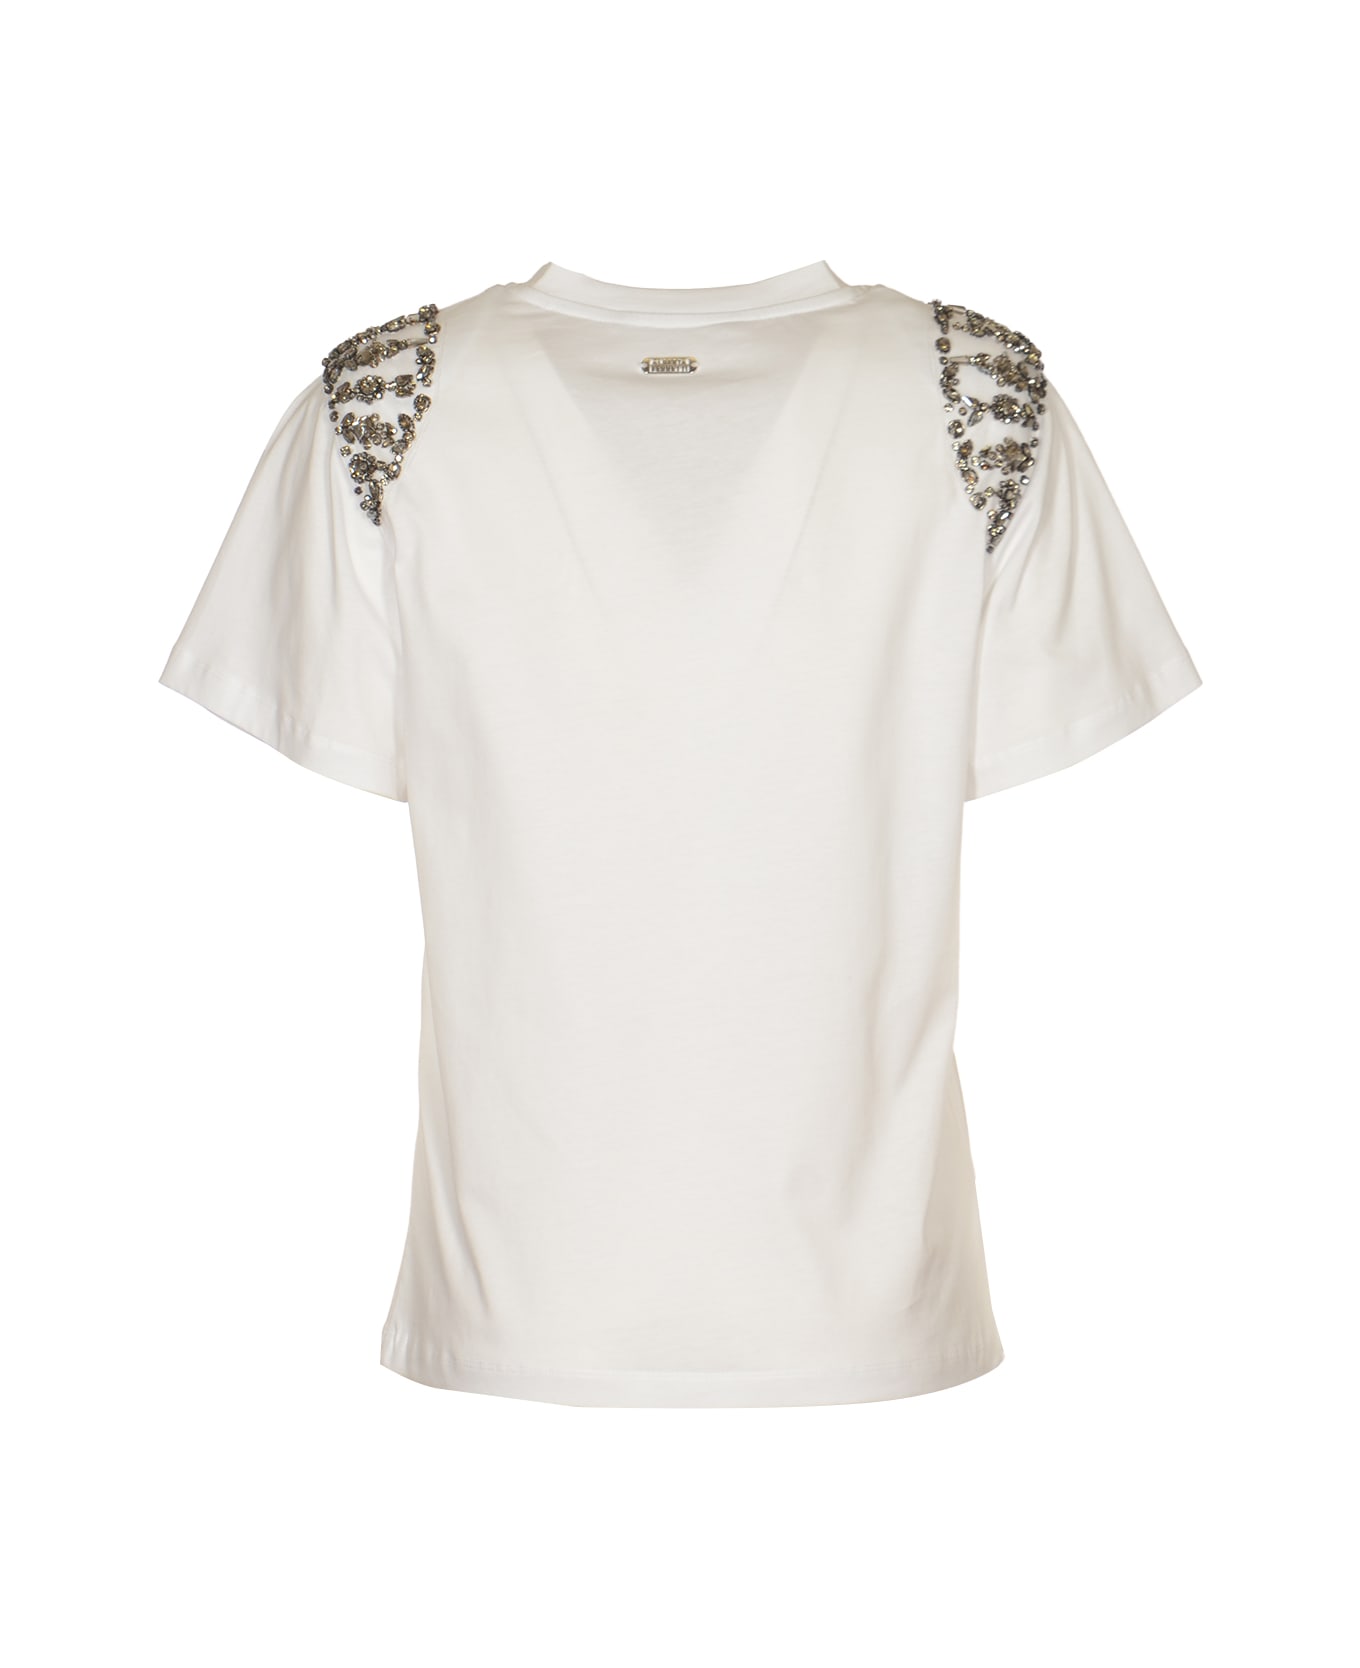 Alberta Ferretti Rhinestone Embellished Round Neck T-shirt